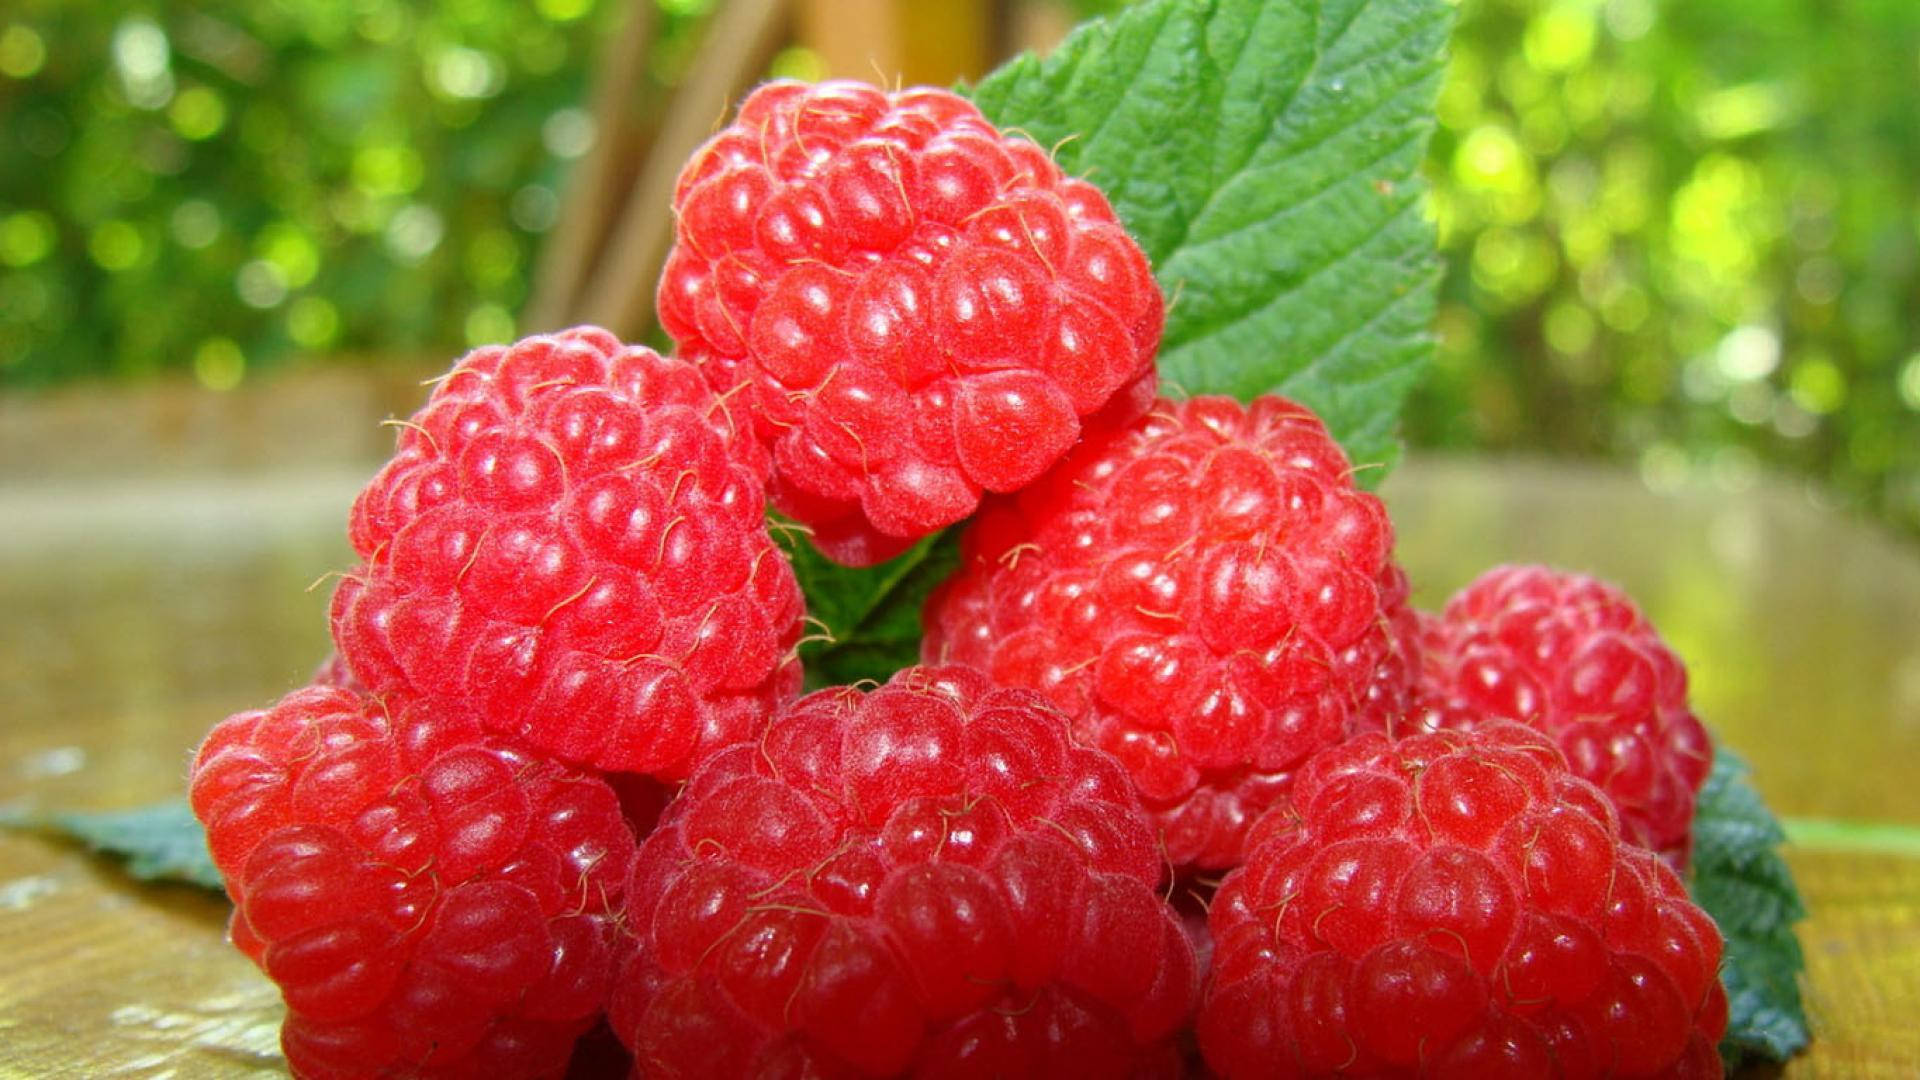 1080p Hd Raspberries Close-up Background